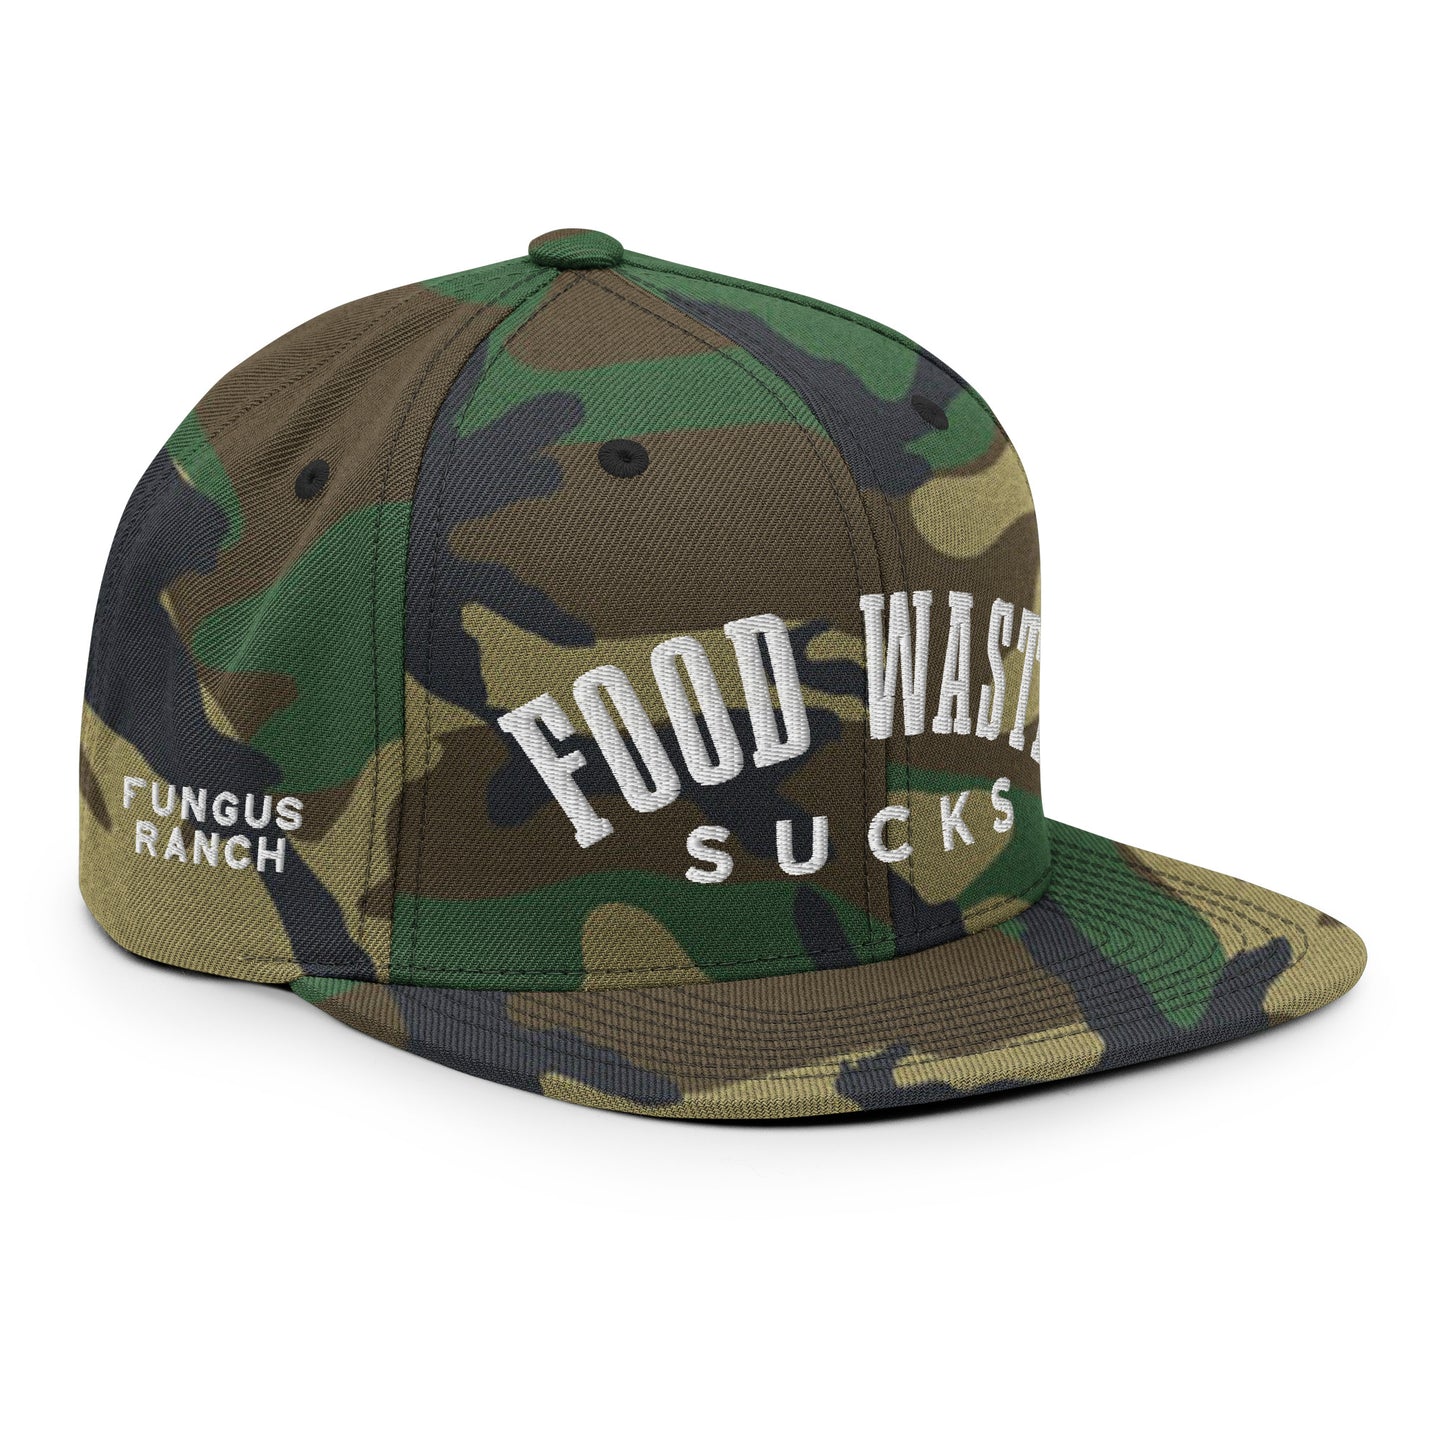 Food Waste Sucks Camo Snapback Hat